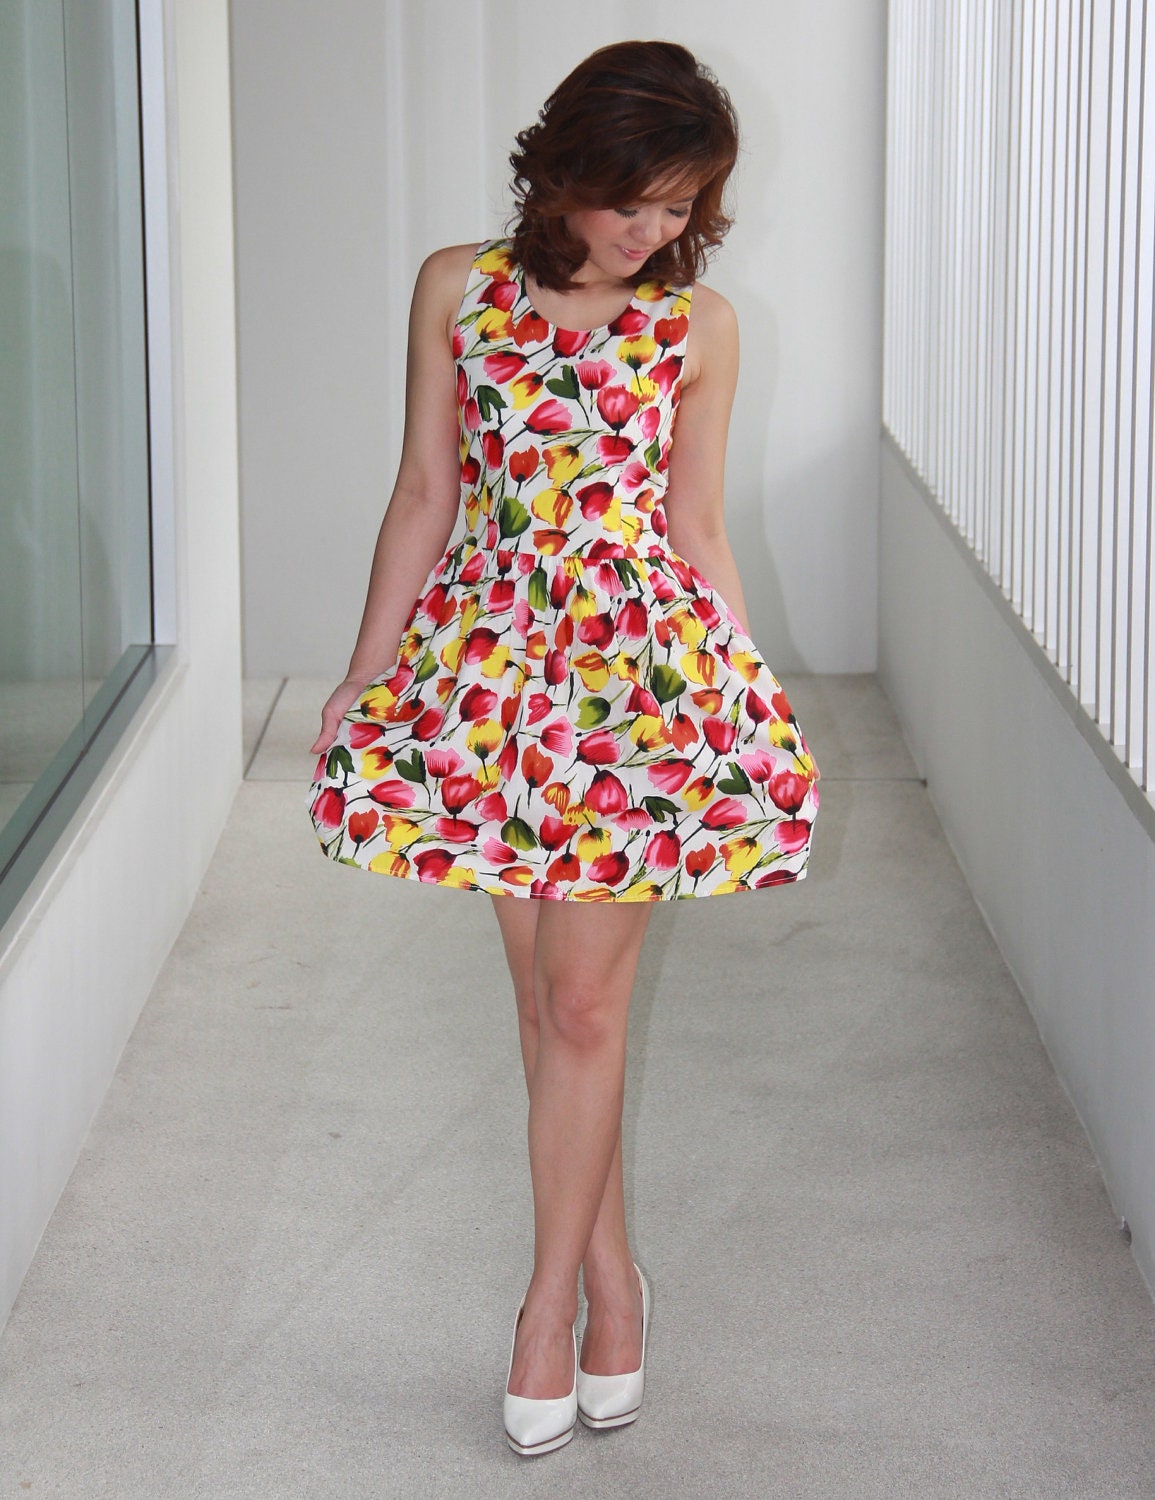 SALE 30%OFF, Pretty mini dress, yellow and orange poppies on a white fabric, Large size - ampidou